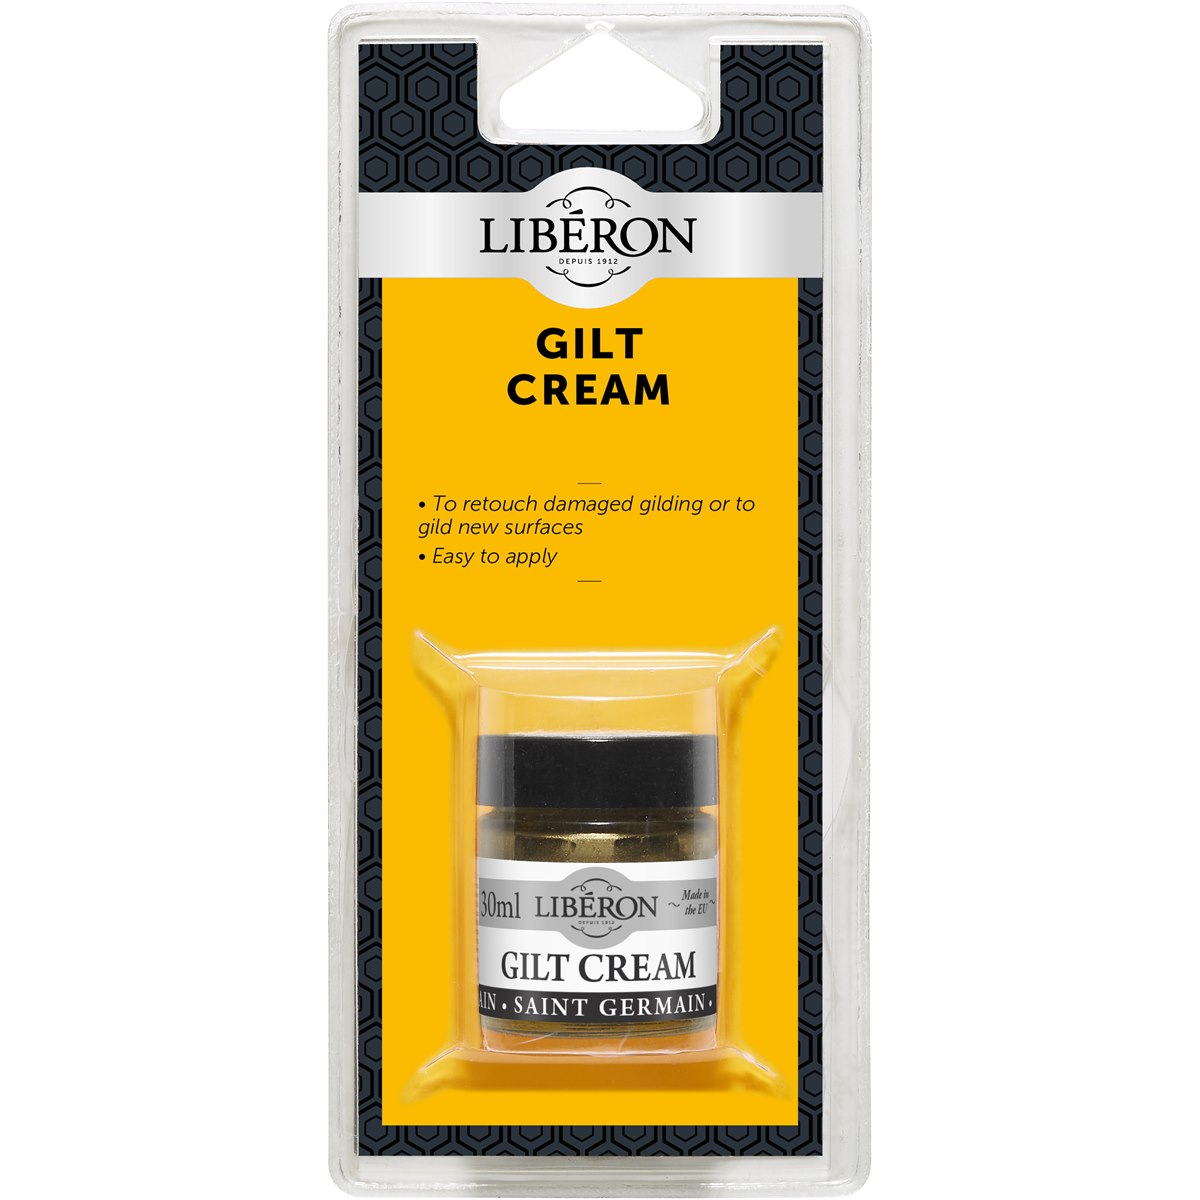 Liberon Gilt Cream St. Germain 100ml